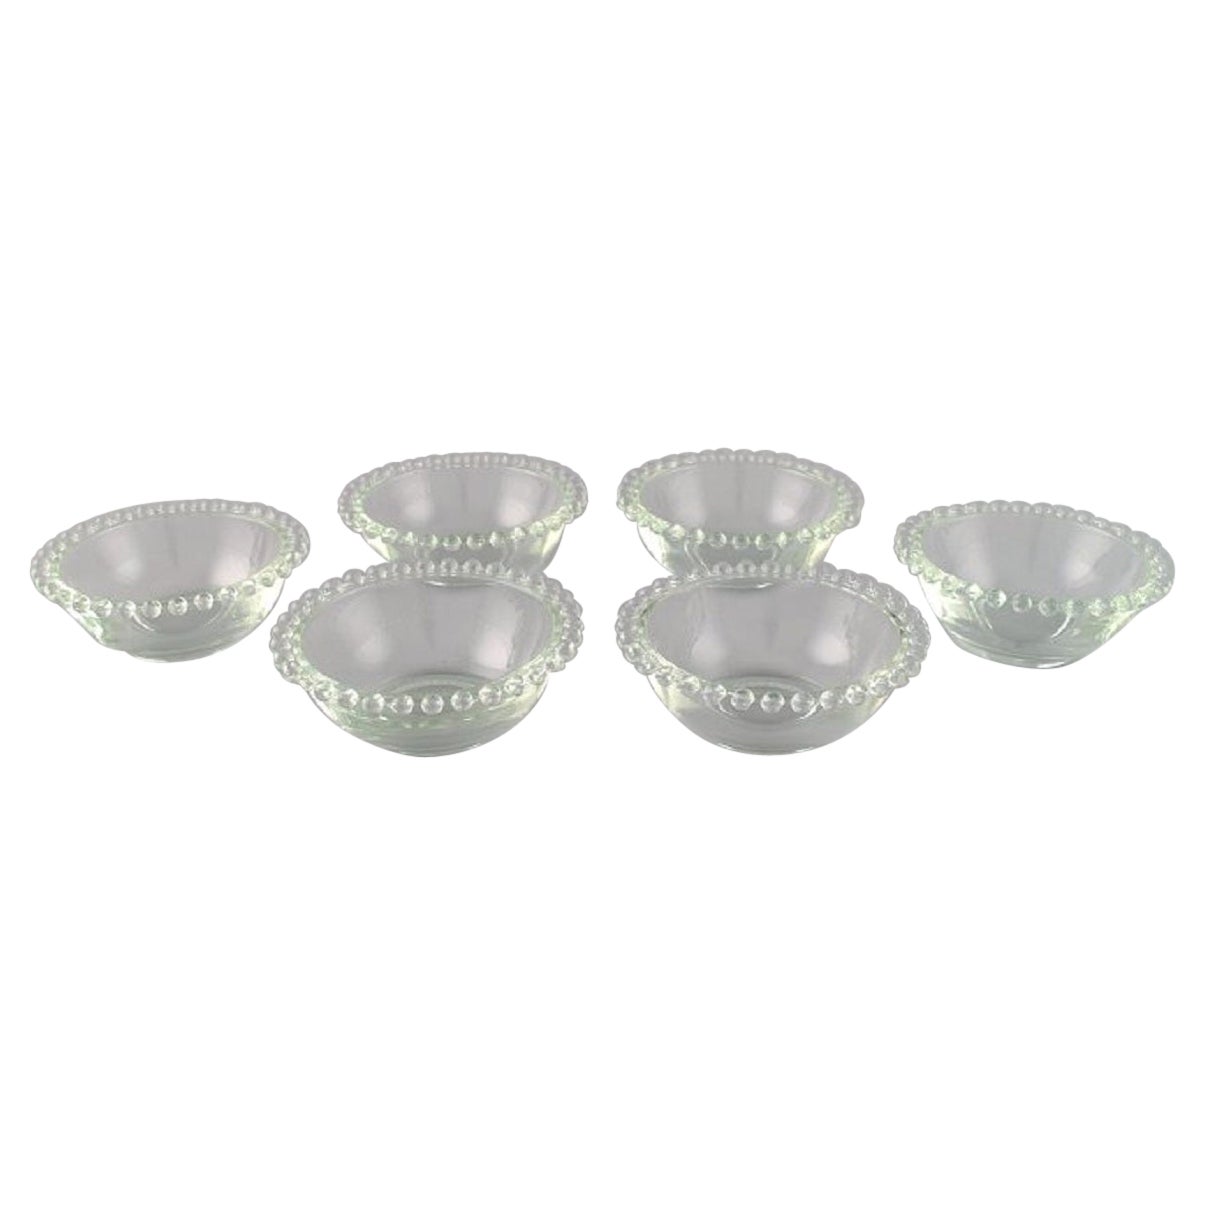 LALIQUE Crystal Finger Bowl Glass / Glasses 6 cm PHALSBOURG Design 